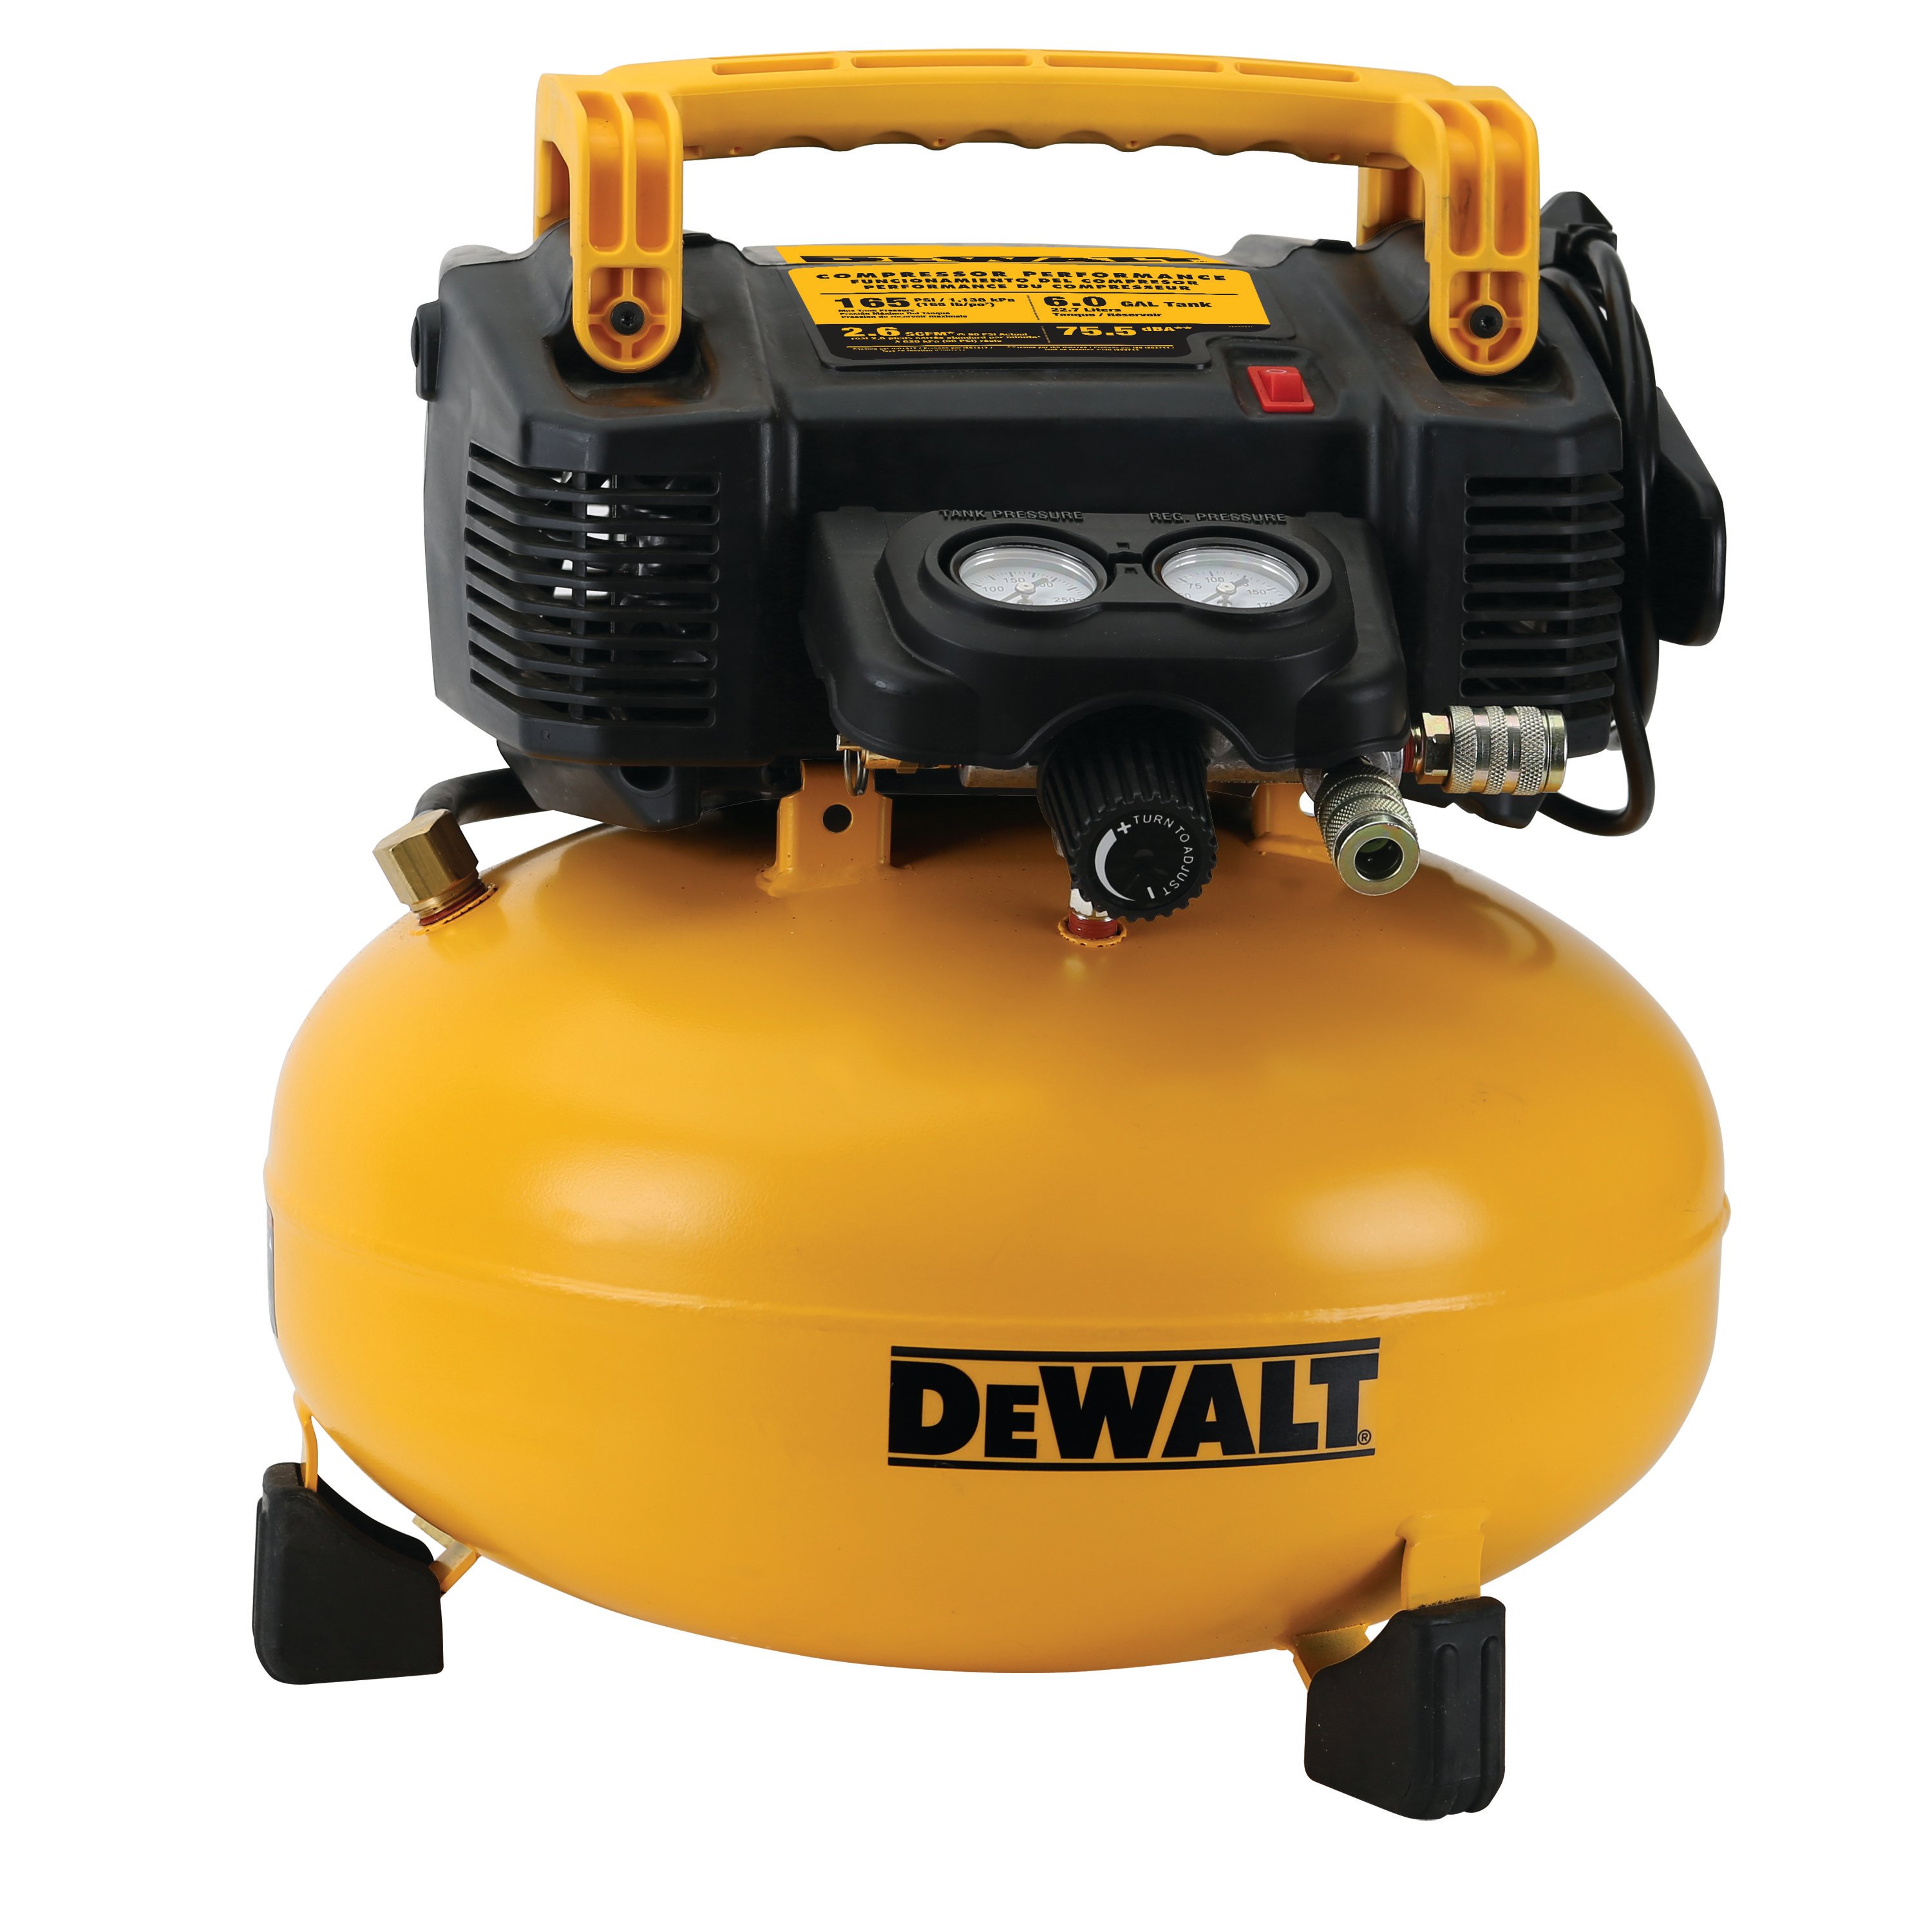 DEWALT® Heavy Duty 165 PSI Pancake Air Compressor - DWFP55126